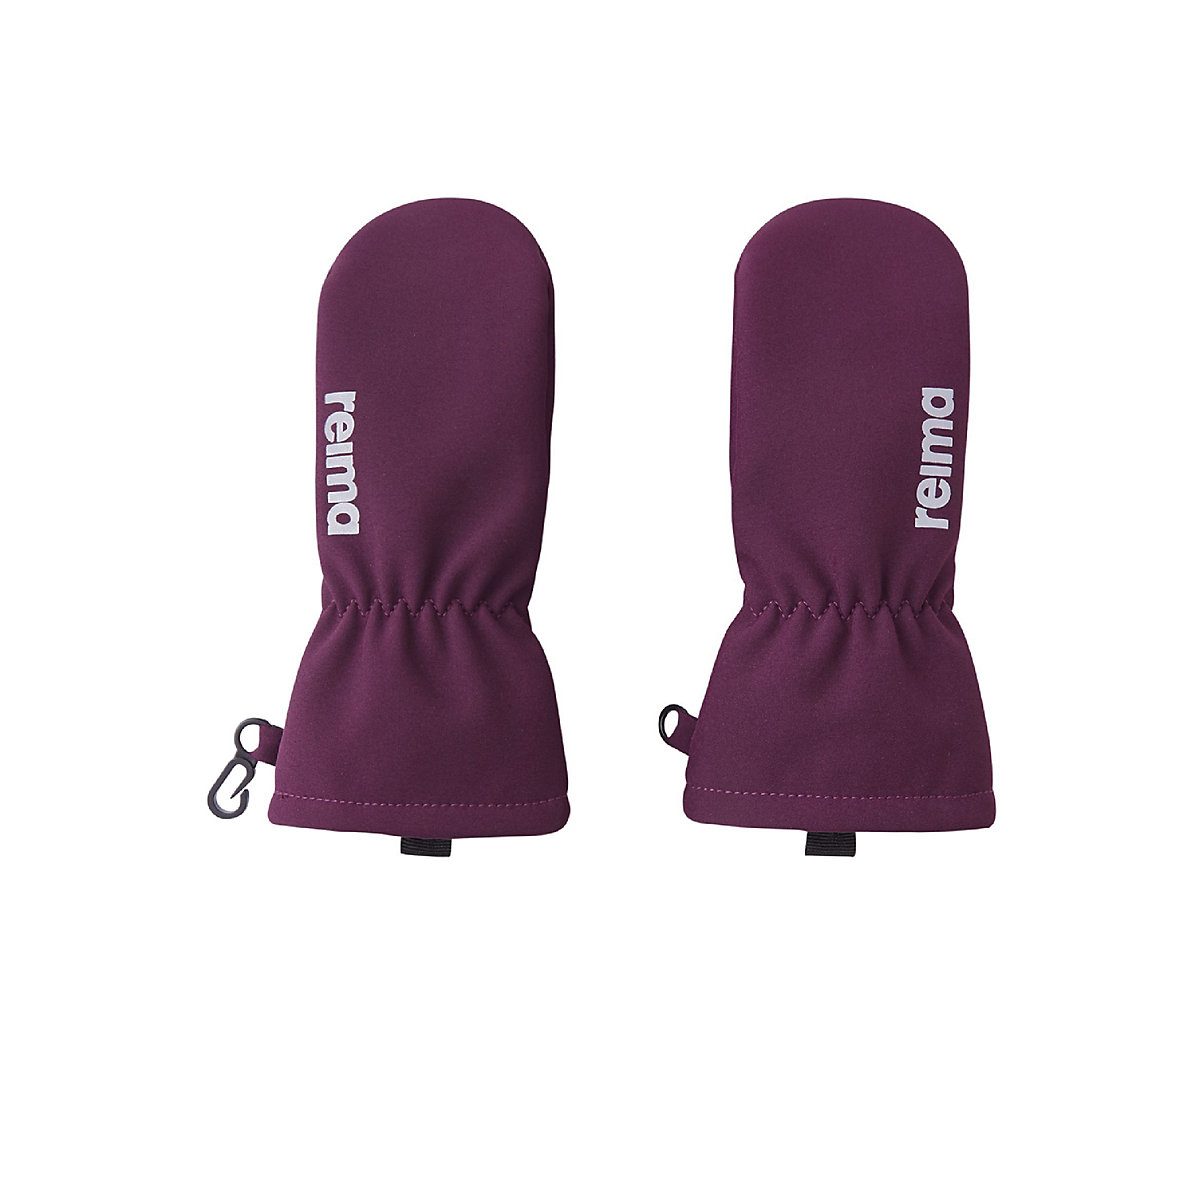 Reima Softshell Handschuhe Osaten Fausthandschuhe für Kinder lila